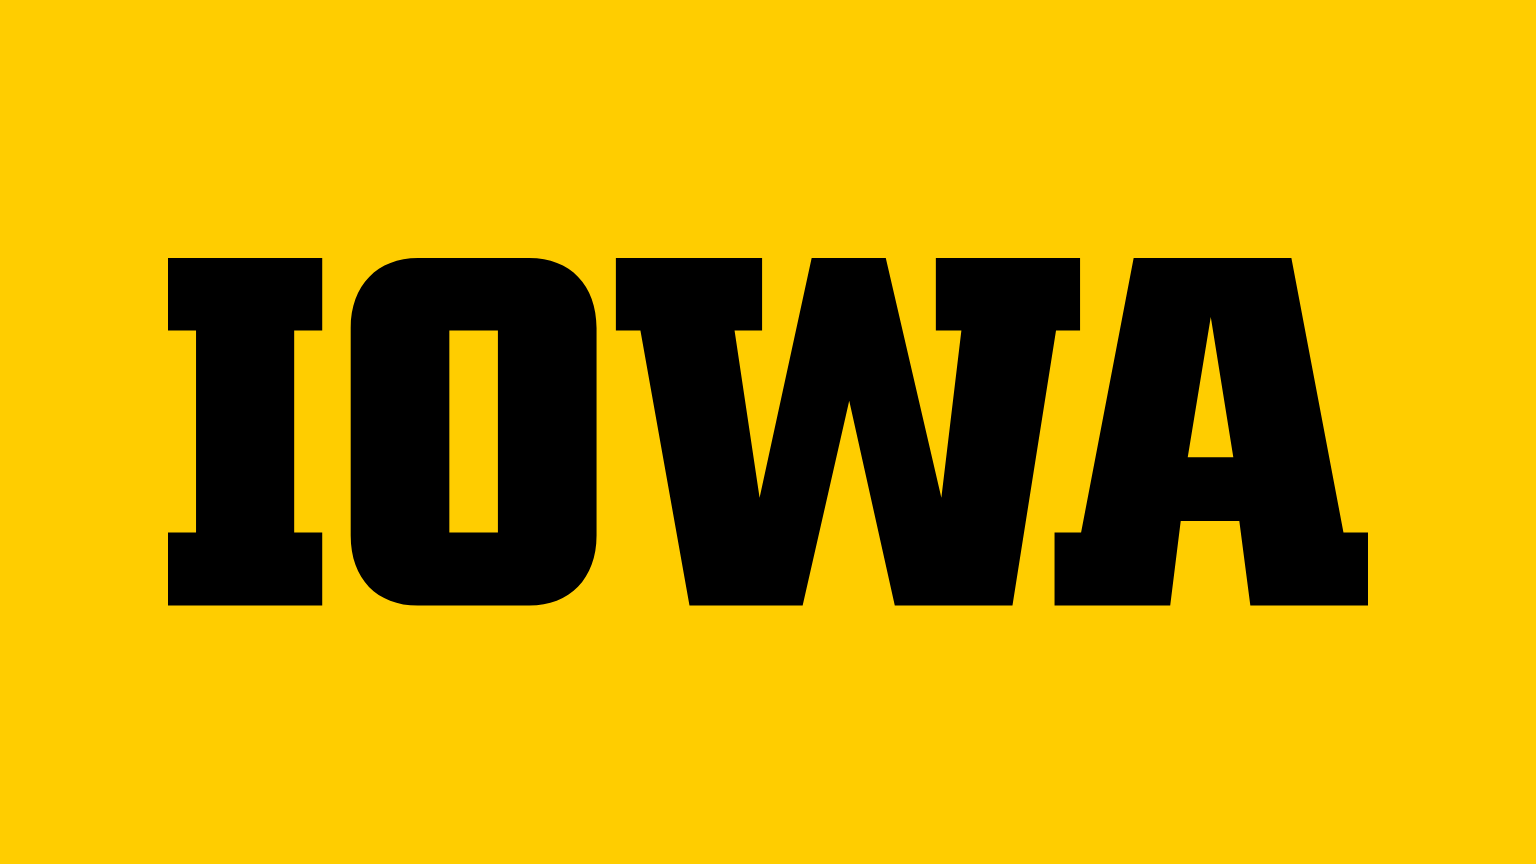 Logo for University of Iowa